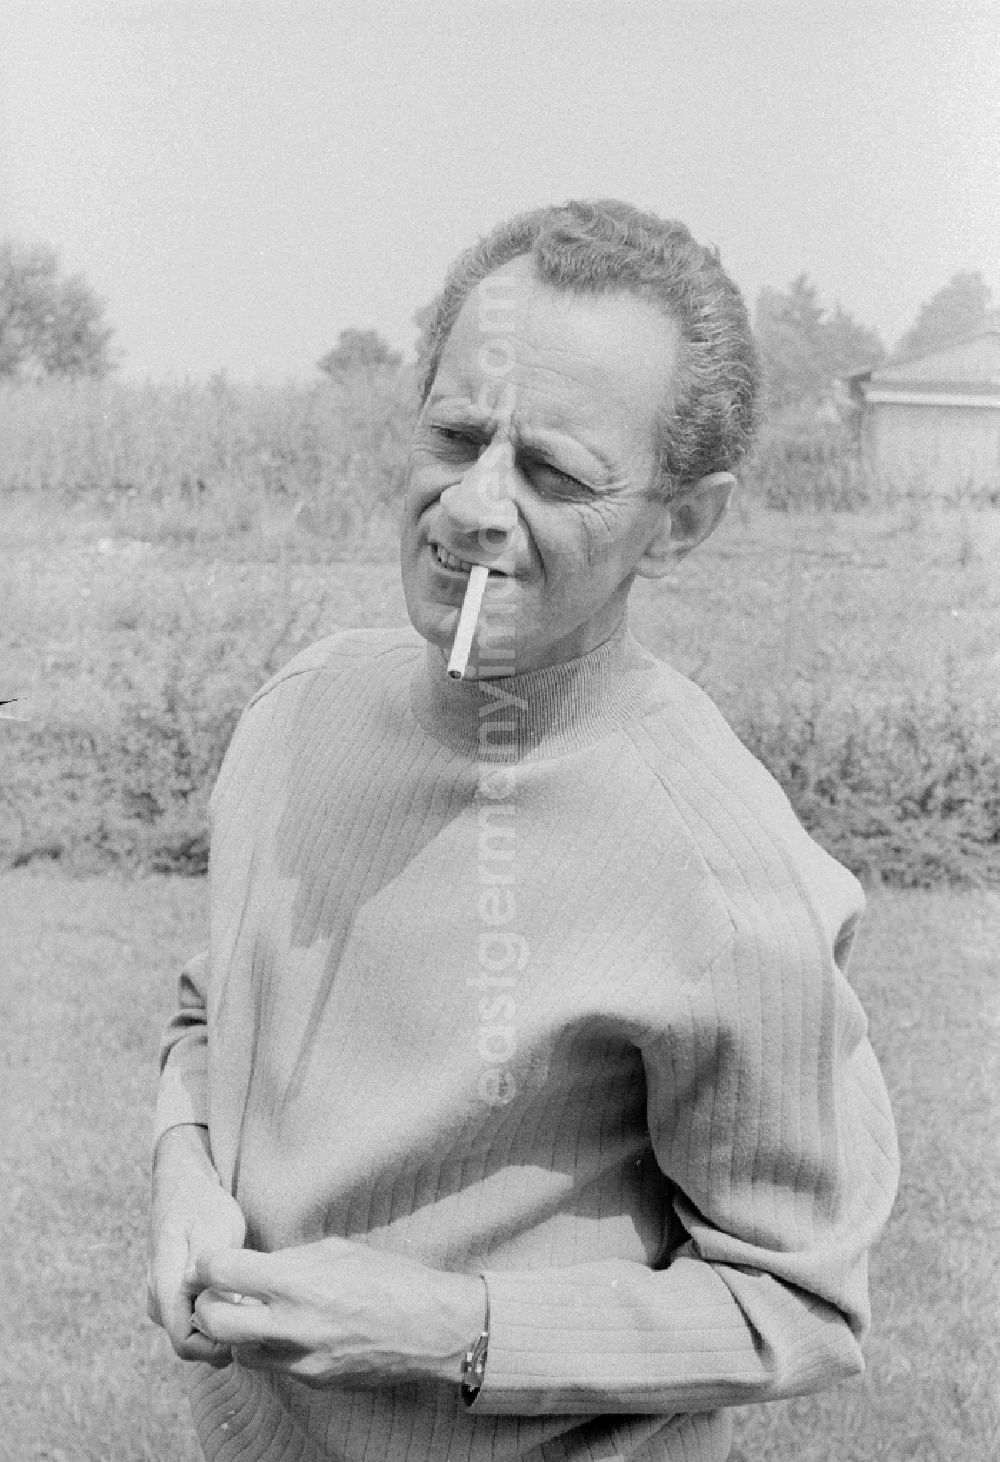 GDR image archive: Zeuthen - The author Dieter Noll (1927 - 20